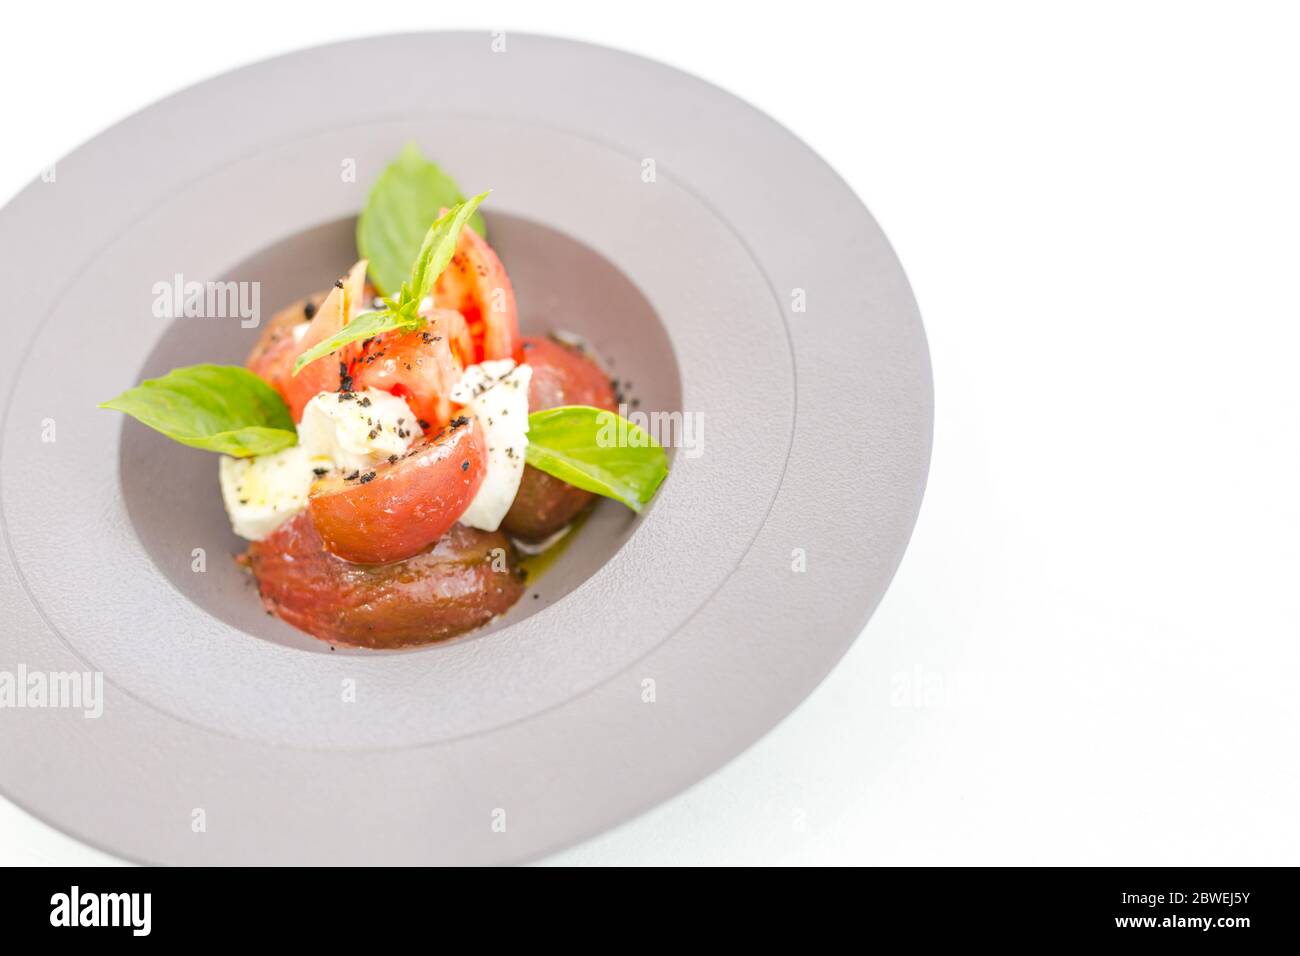 Insalata caprese. Italienischer Gourmet-Salat aus Tomaten, Zucchini und Büffelmozzarella Stockfoto